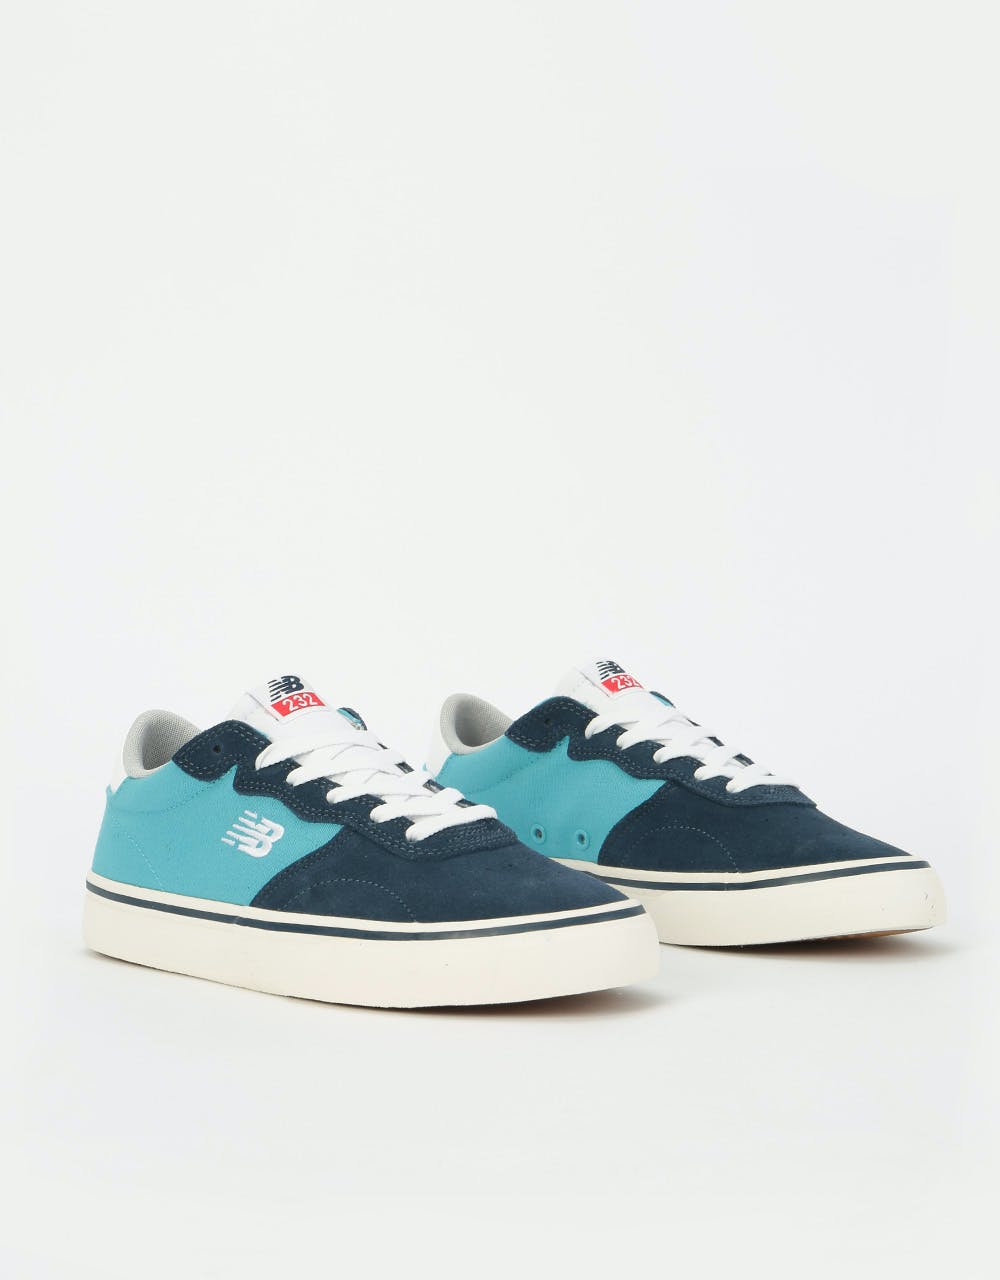 New Balance AM 232 Skate Shoes - Navy/Blue